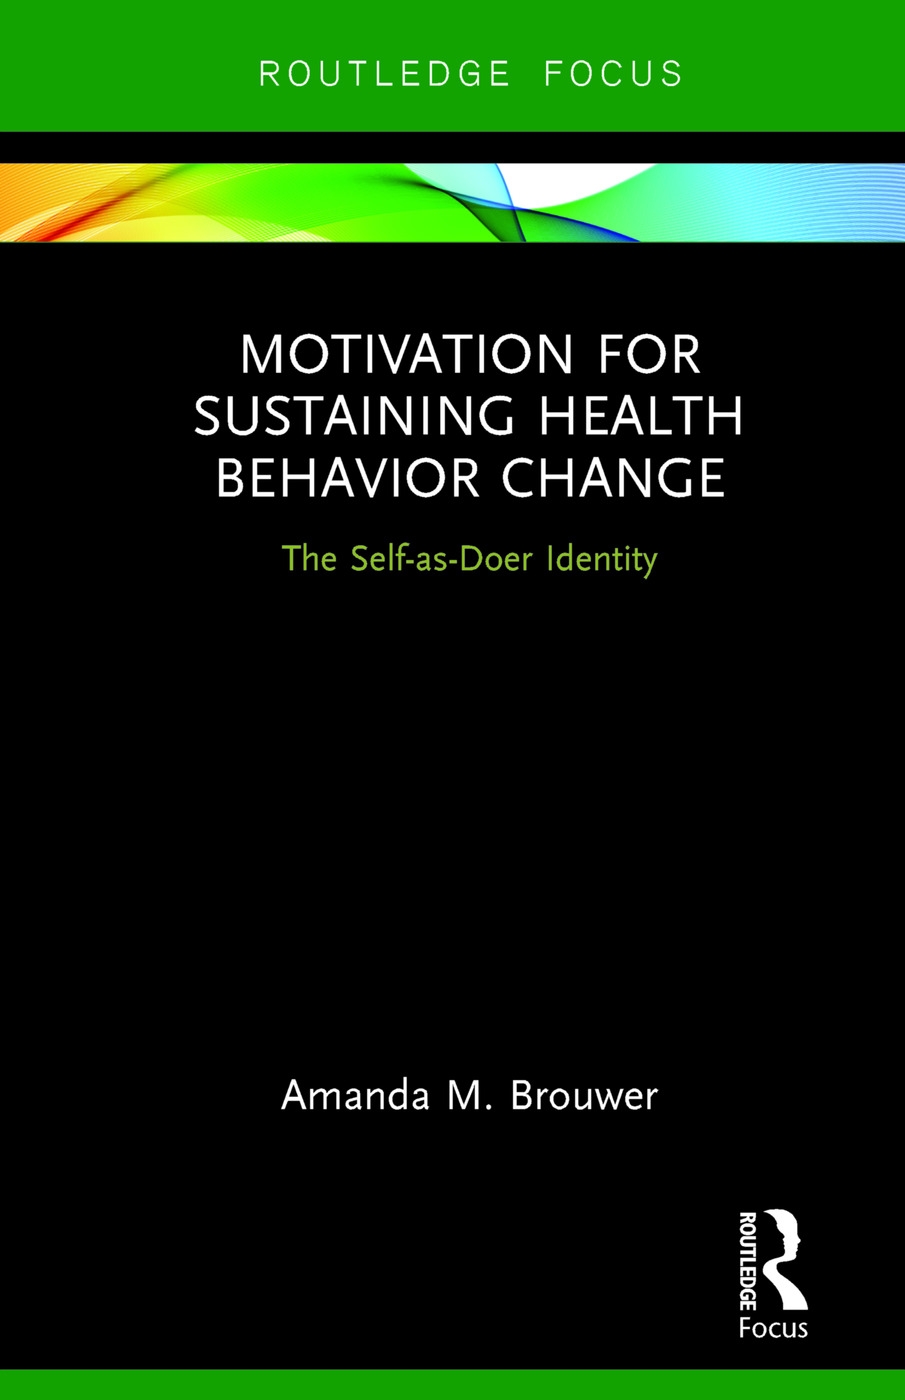 Motivation for Sustaining Health Behavior Change: The Self-as-Doer Identity